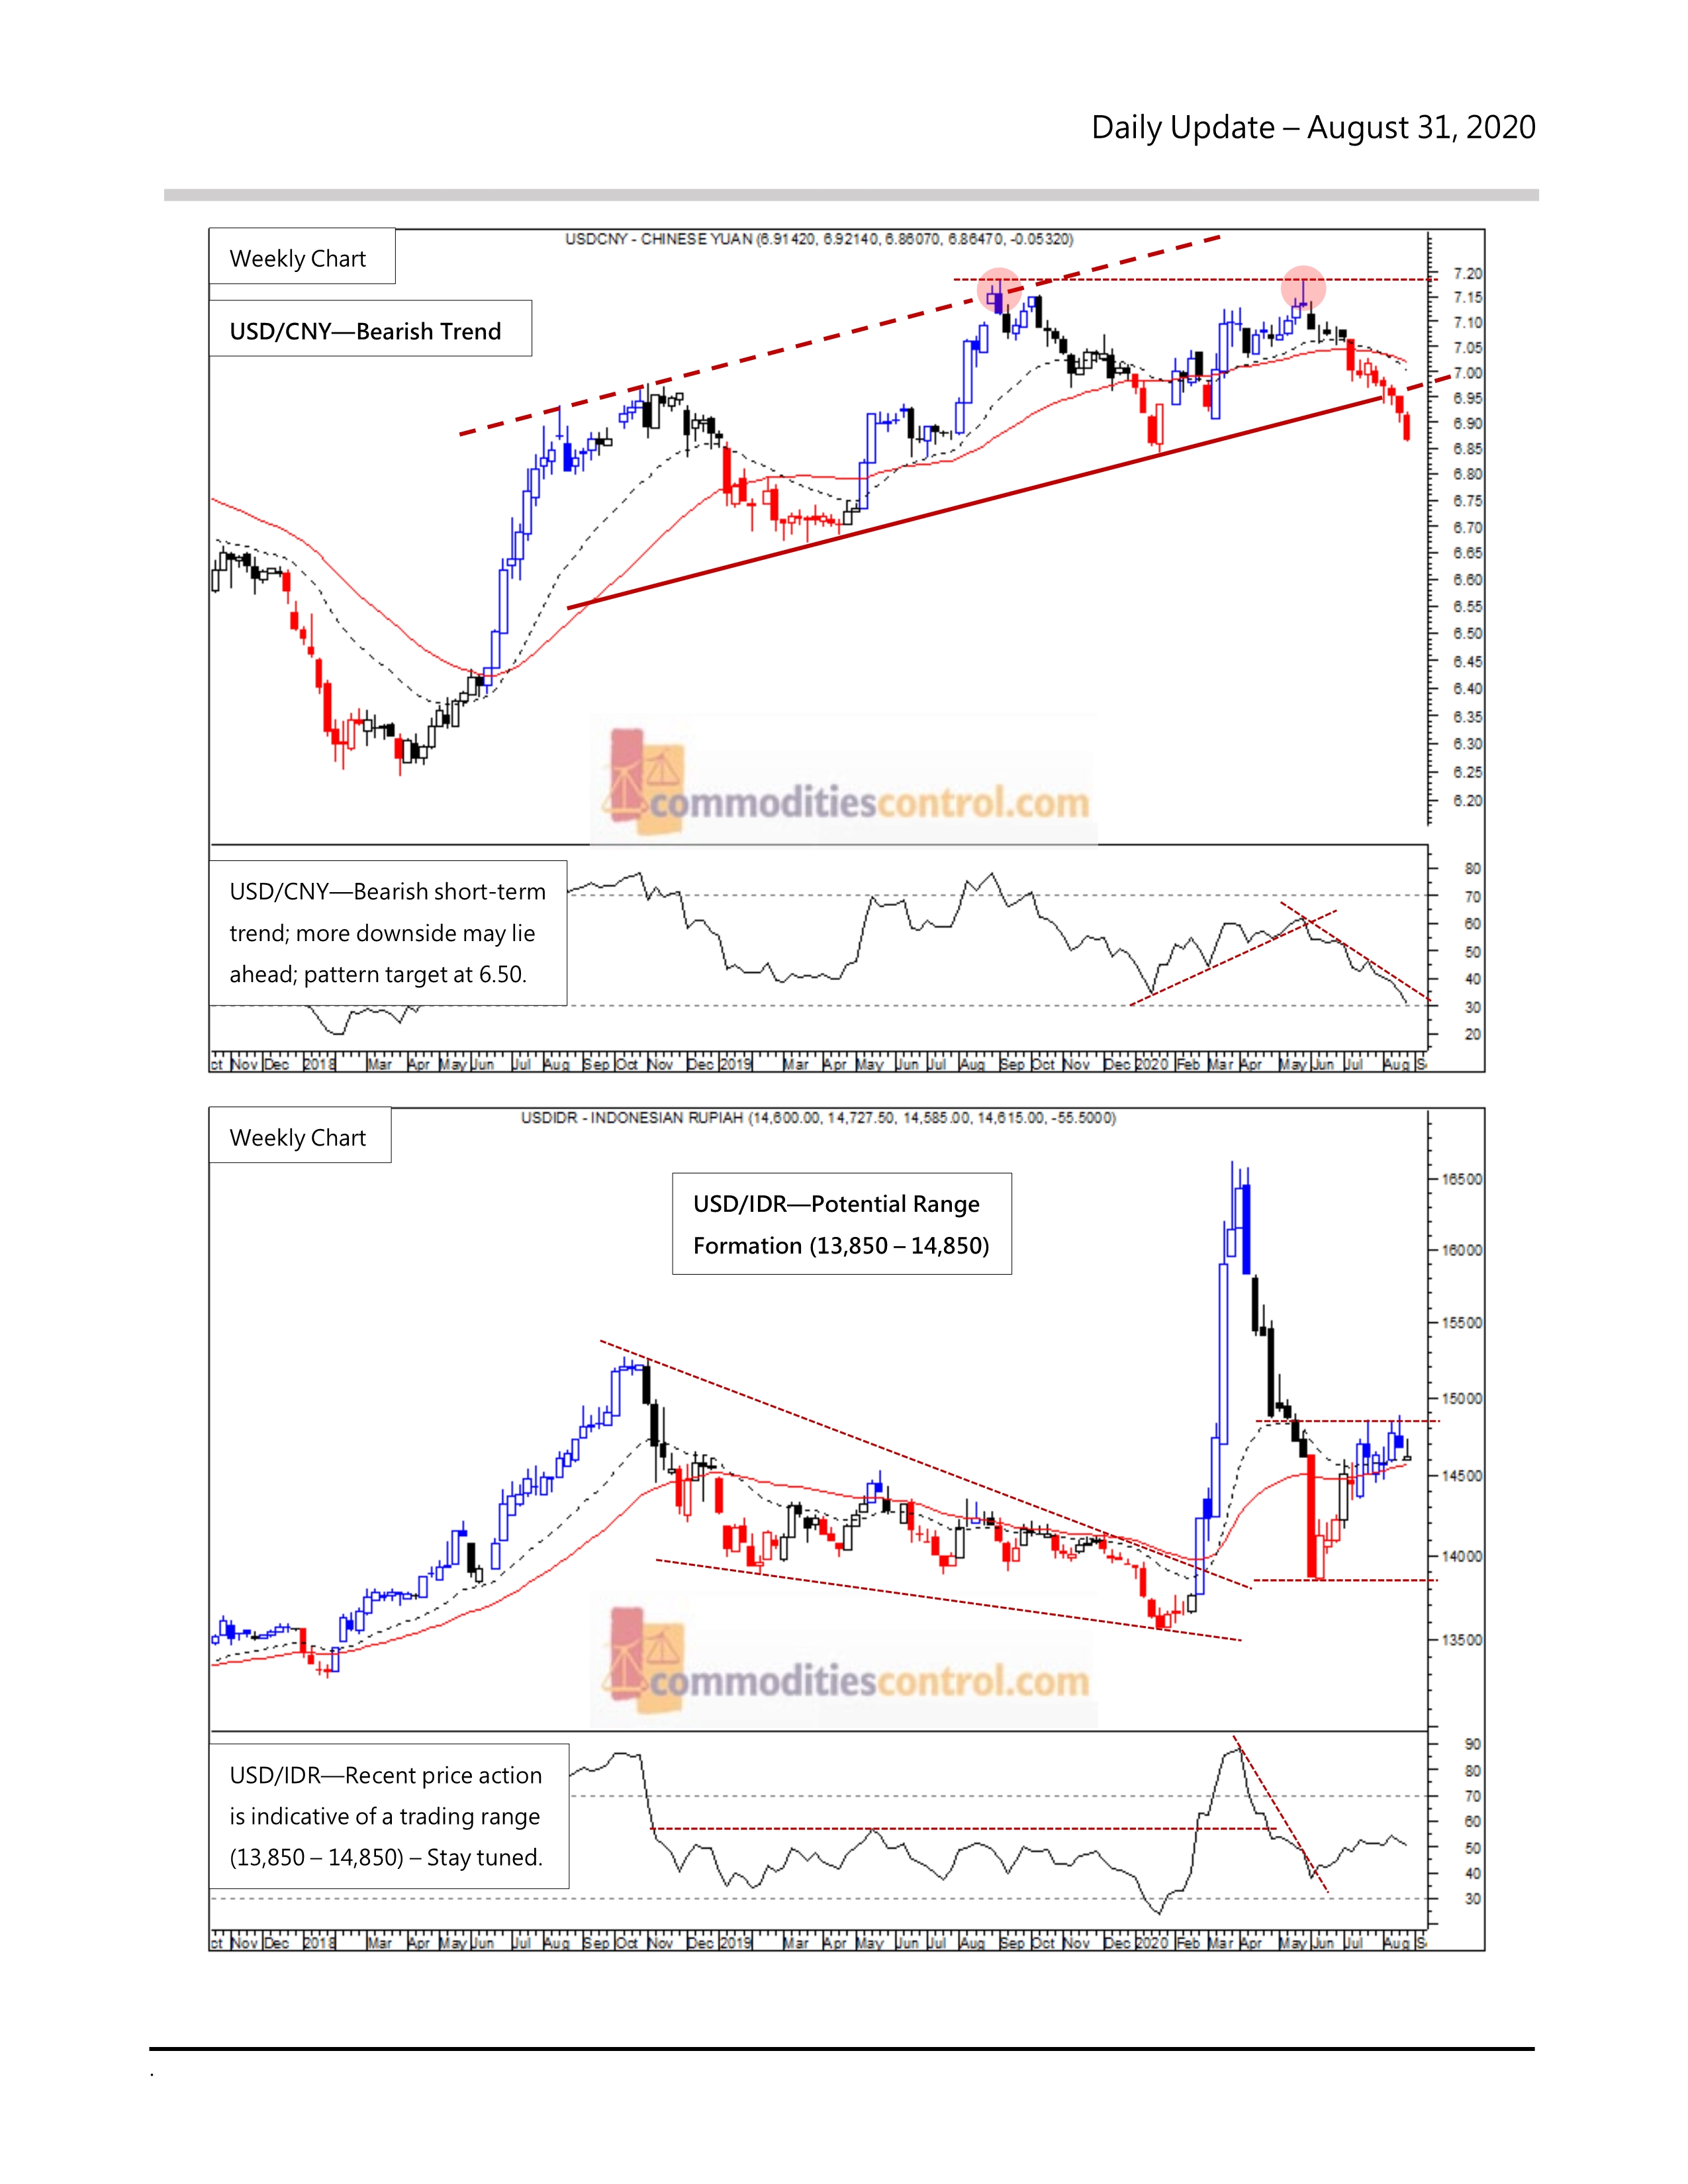 USD/CNY & USD/IDR - Commoditiescontrol.com